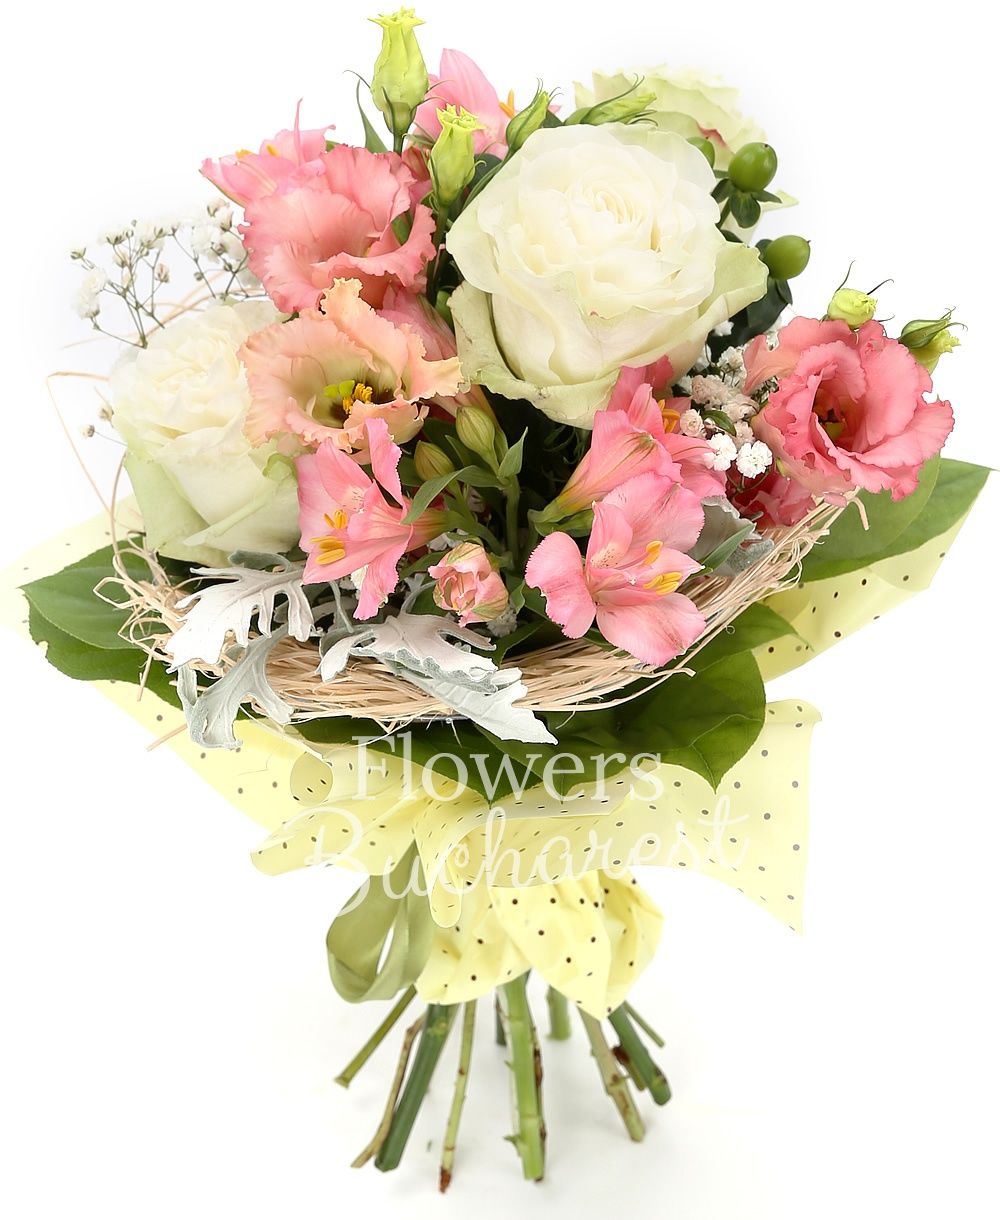 3 white roses, 2 pink alstroemerias, 2 pink lisianthus, 2 green hypericum, greenery